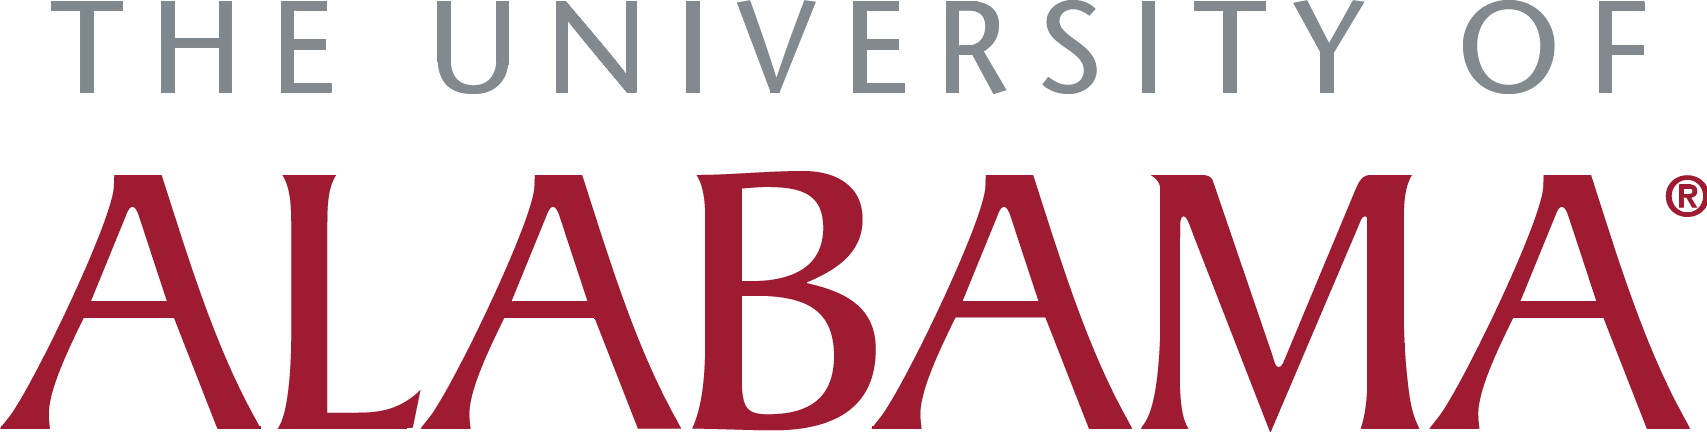 File:University of Alabama (logo).png - Wikimedia Commons